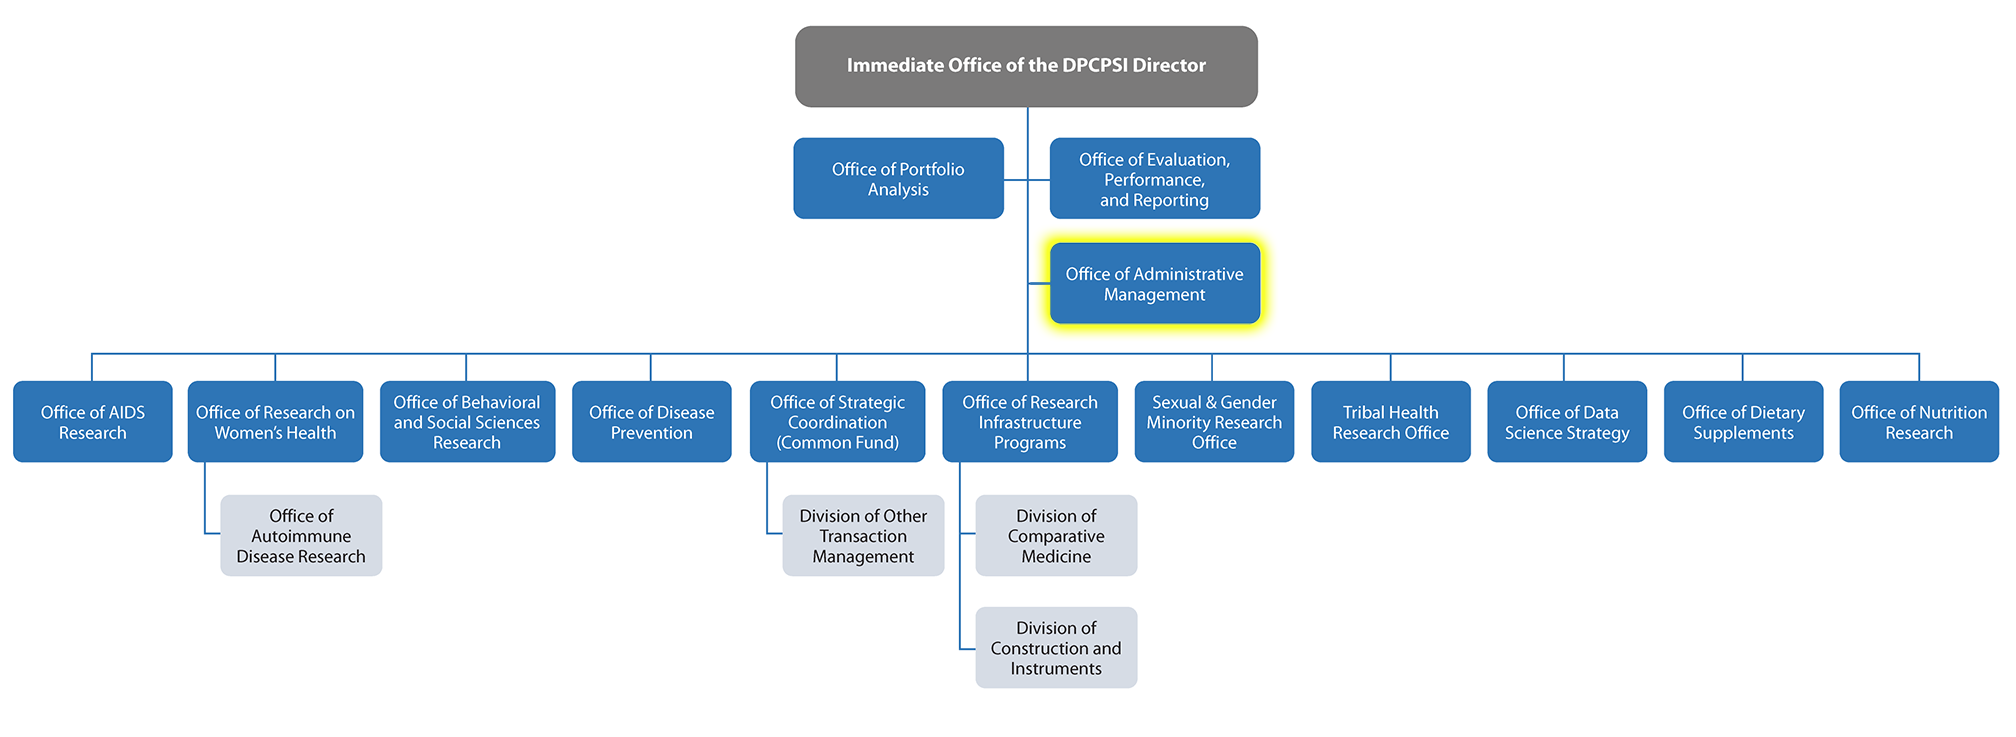 DPCPSI Organizational chart